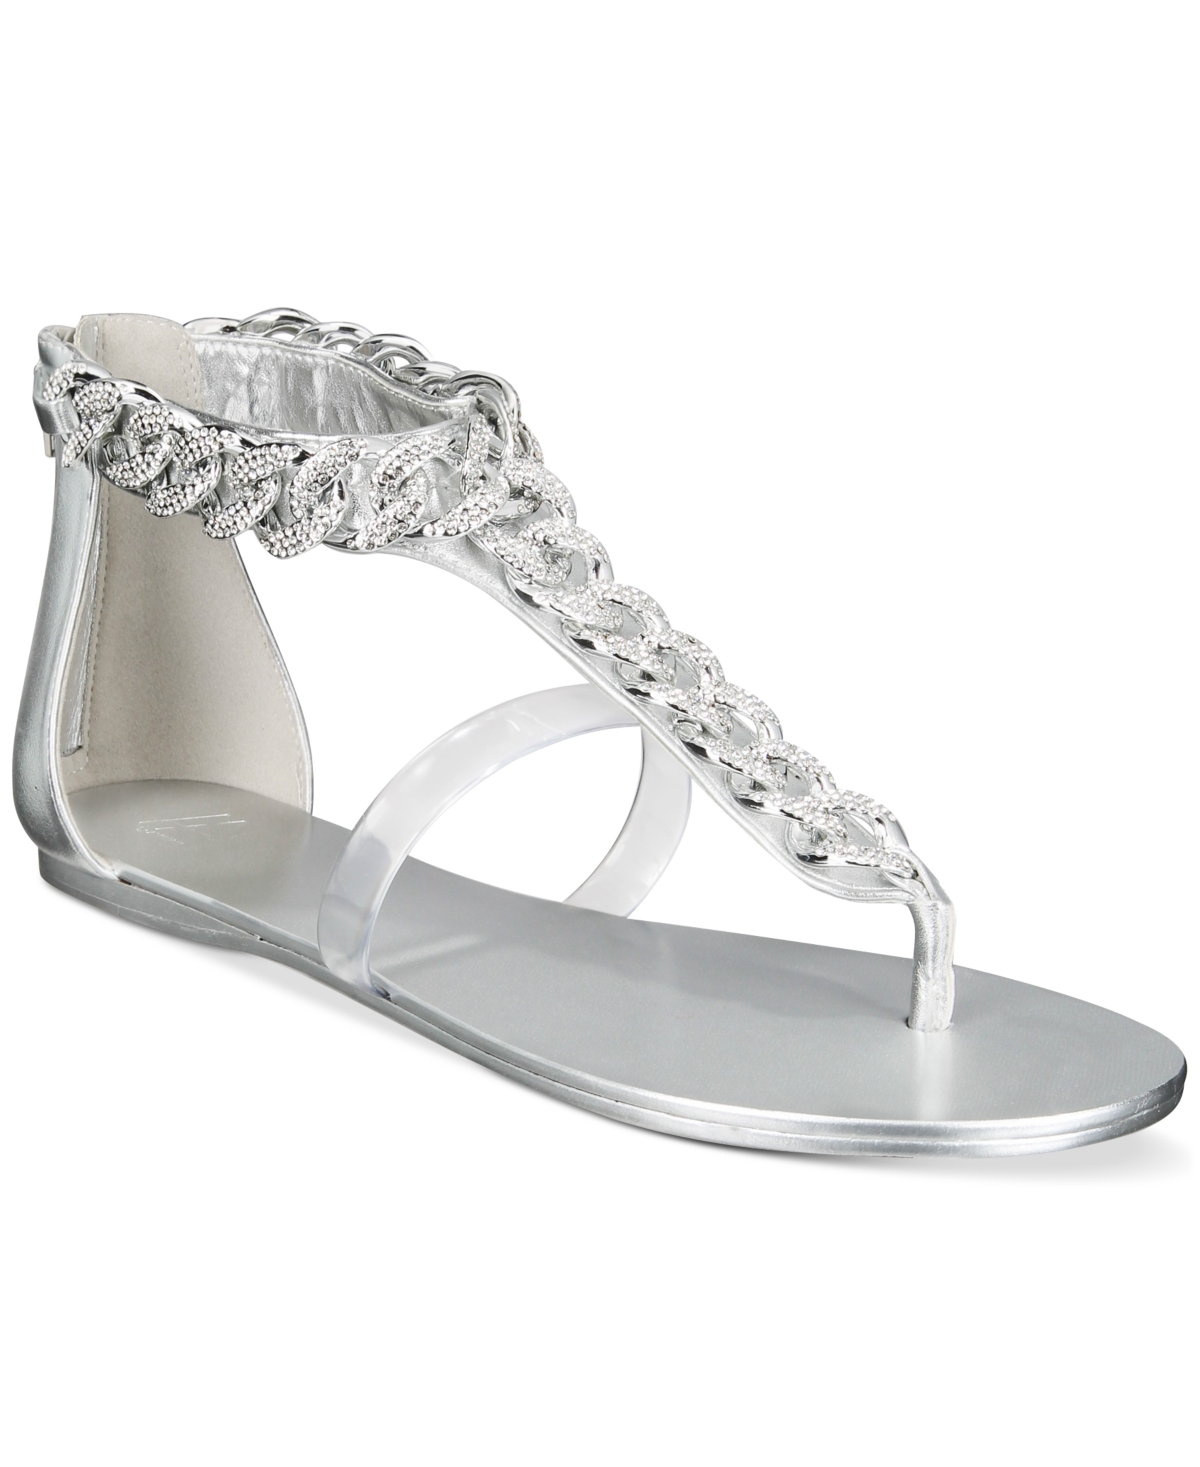 Aurora Women's Crystal Chain Flat Sandals - Silver